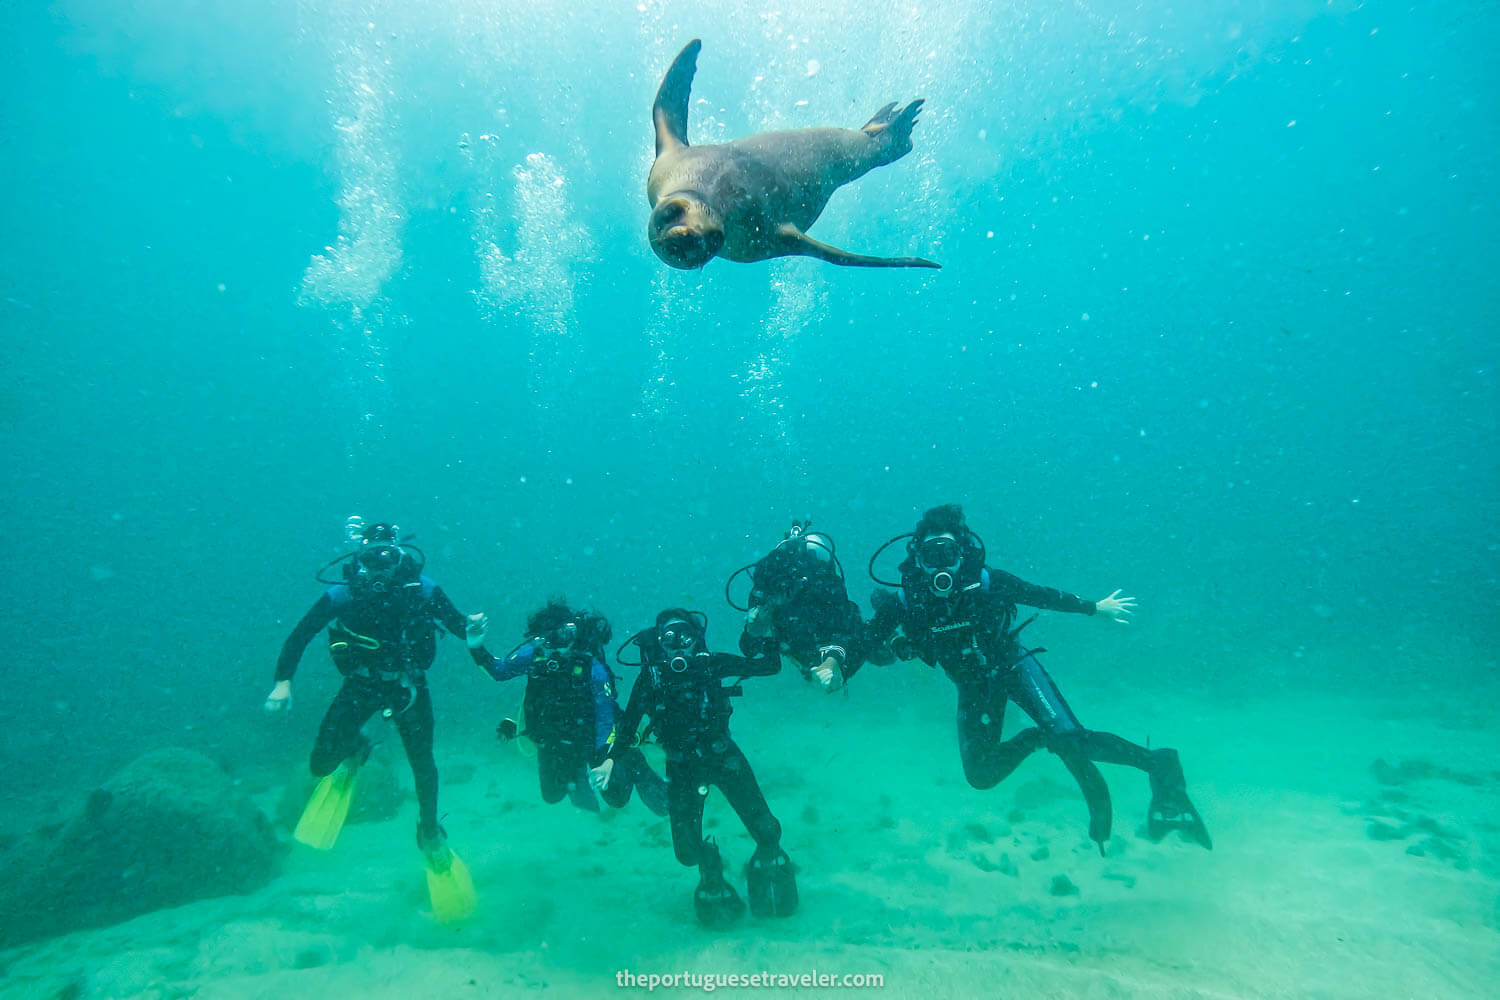 A sea lion photo-bombing the divers in Tijeretas Bay